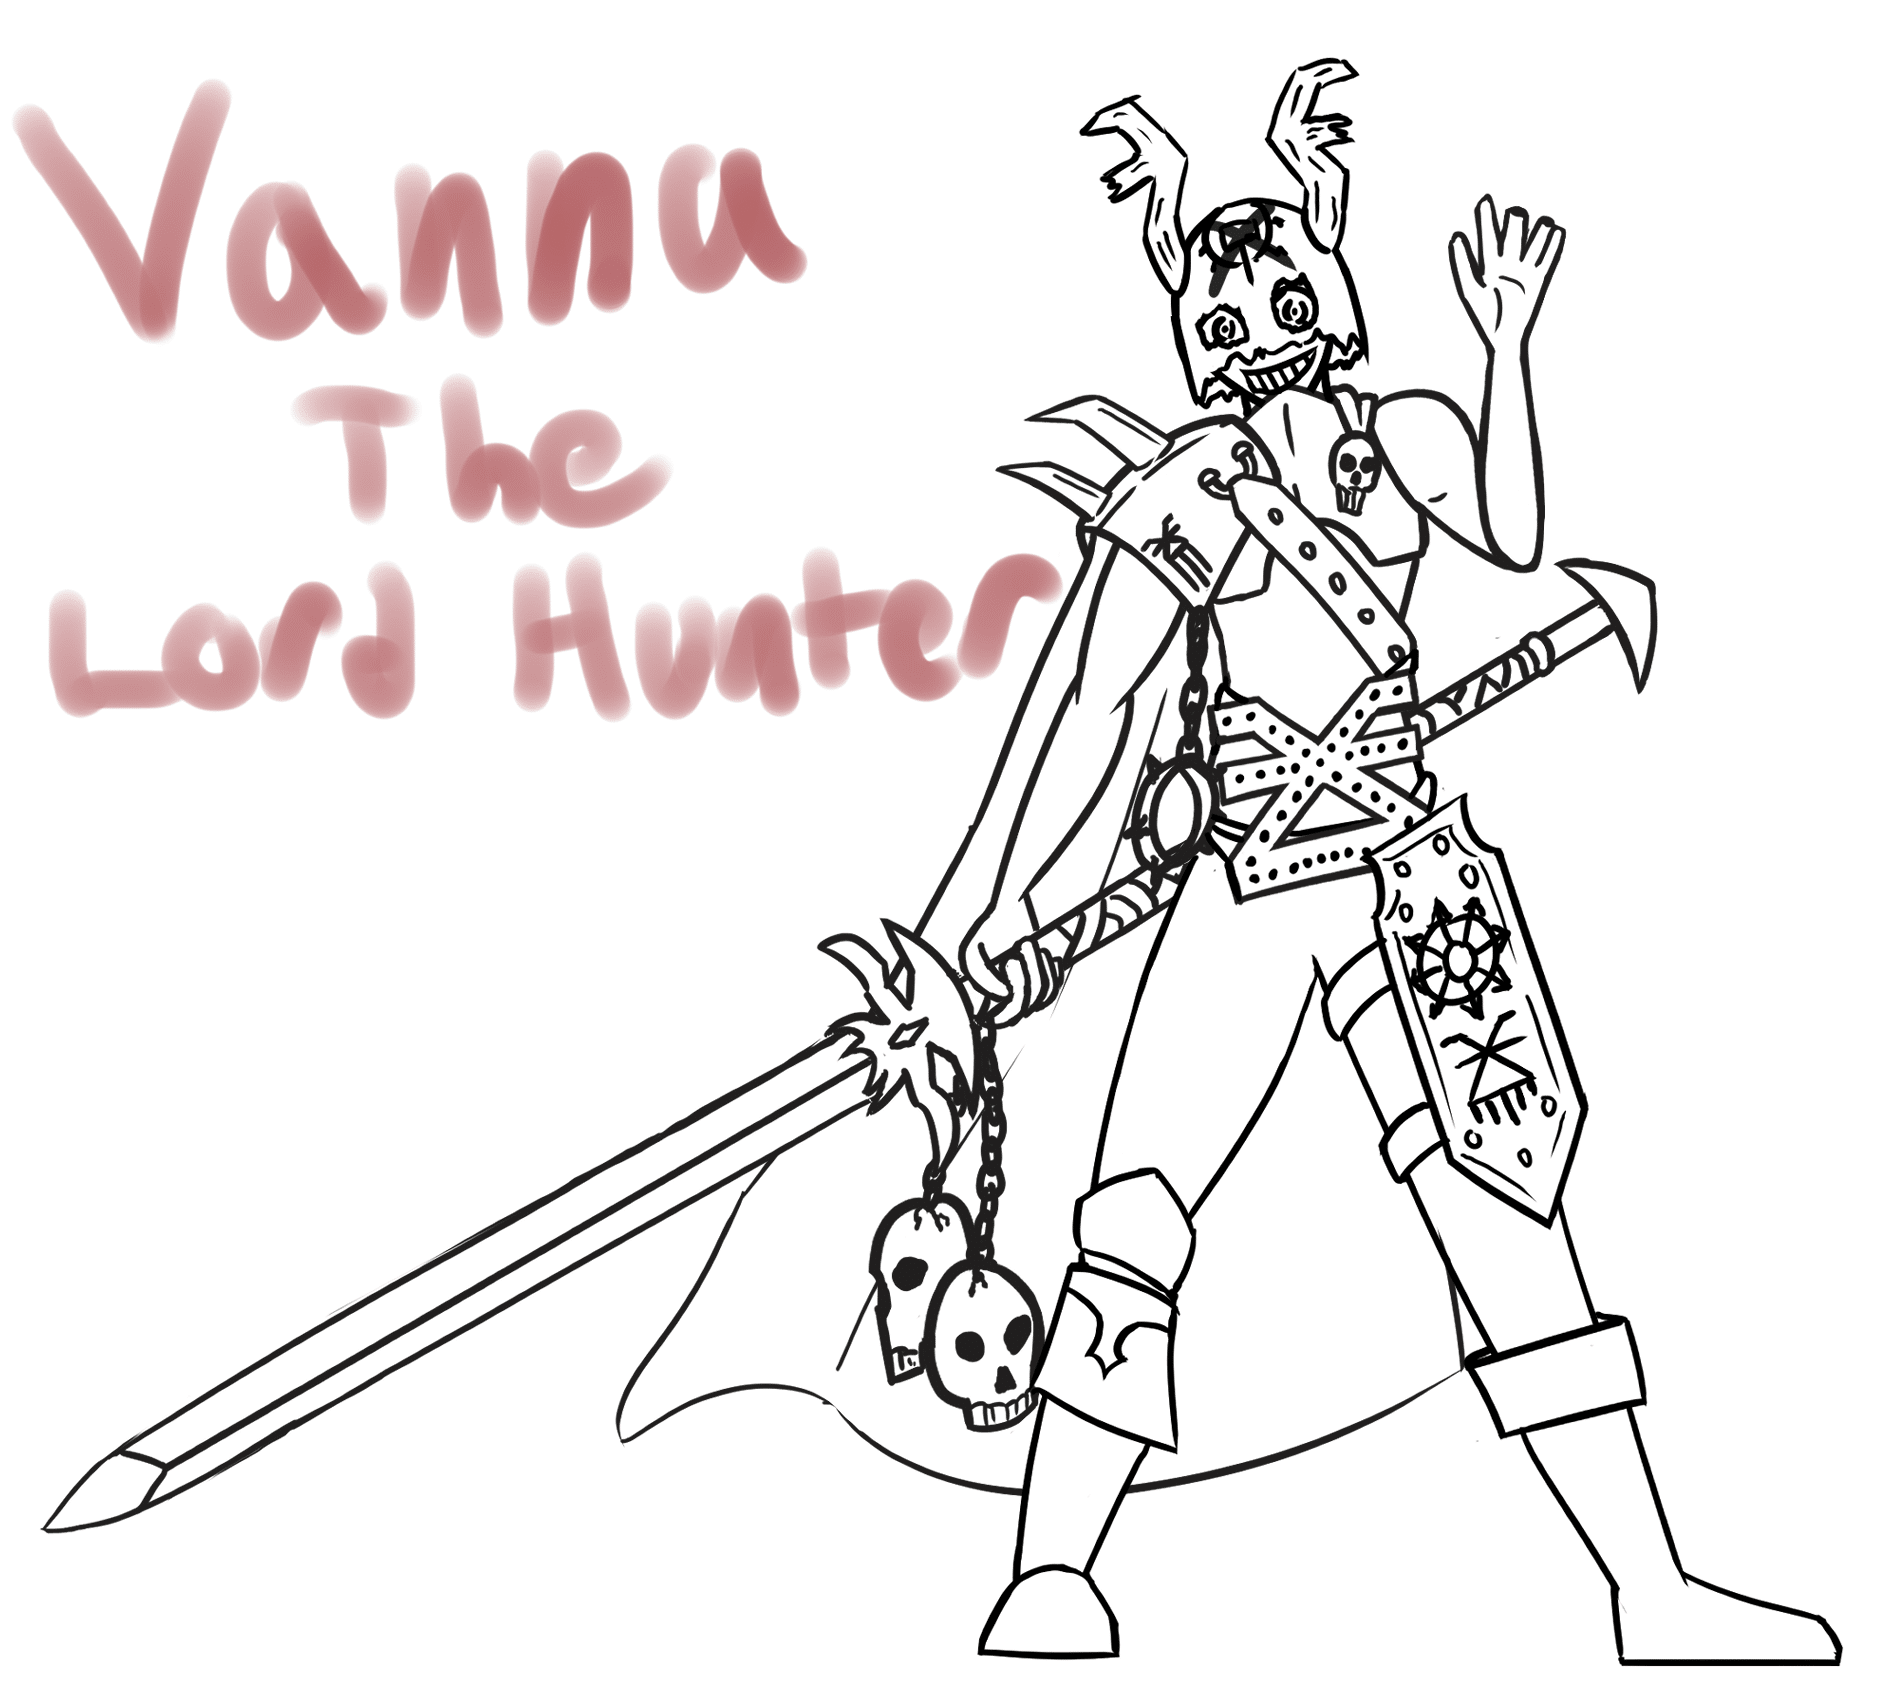 Vanna the Lord Hunter